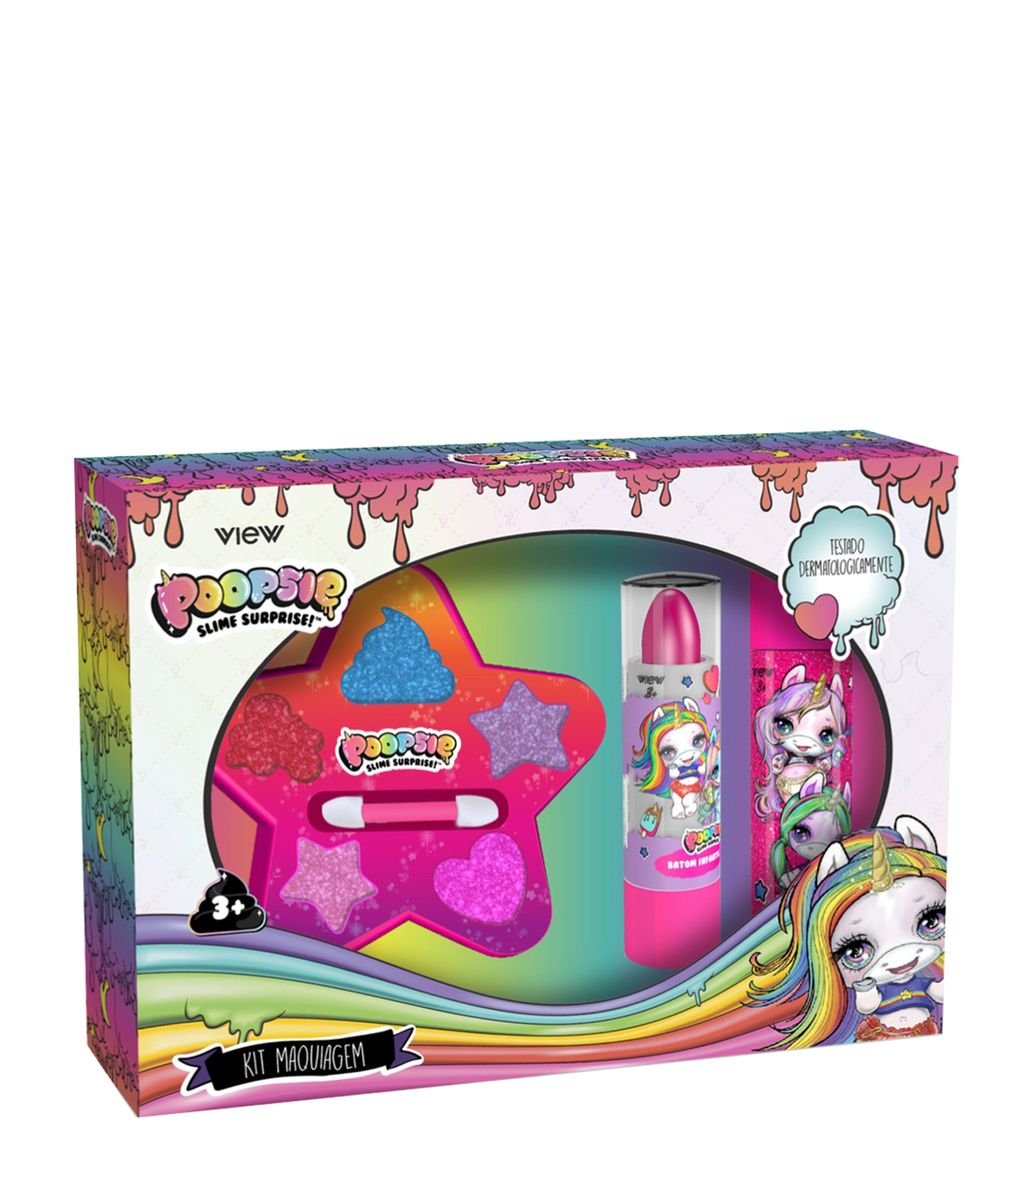 Toyvian 1 Conjunto De Cosméticos Infantis Kit De Maquiagem De Princesa Para  Meninas Kit De Maquiagem De Meninas Pequenas Conjunto De Maquiagem De